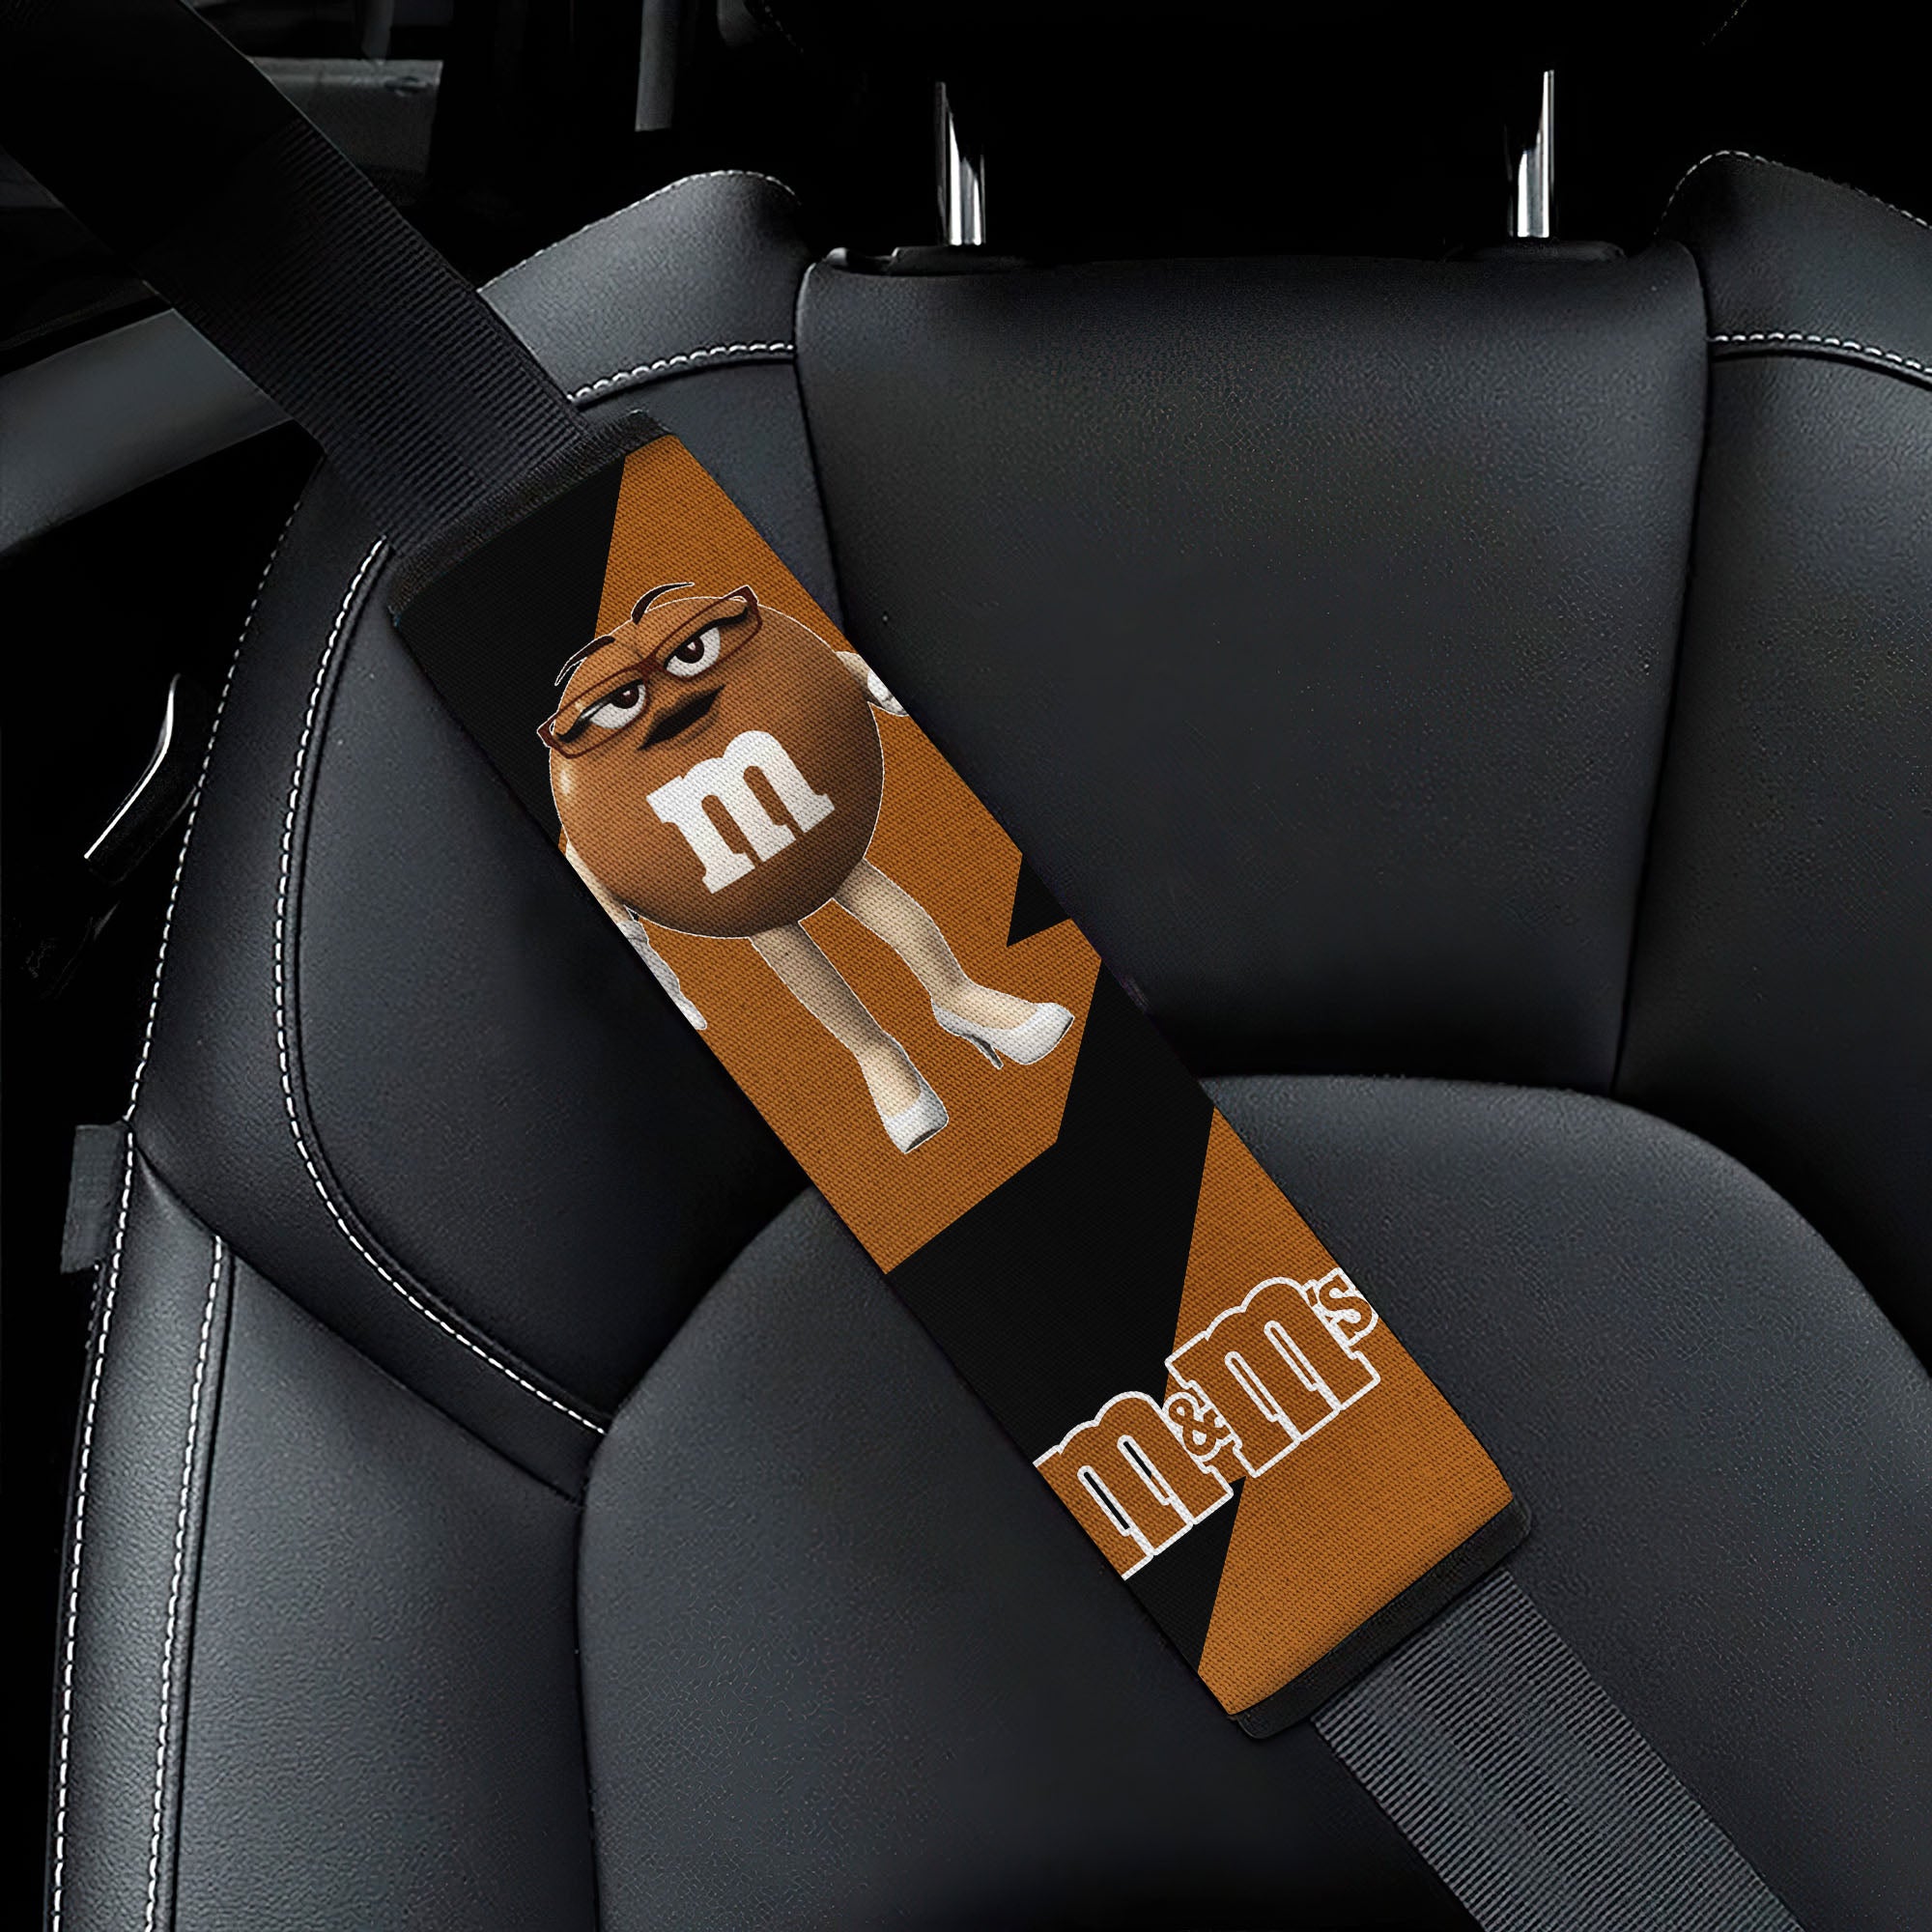 M&M's Candy Ice Cream Cones Chocolate Brown Custom car seat belt covers Custom Car Accessories